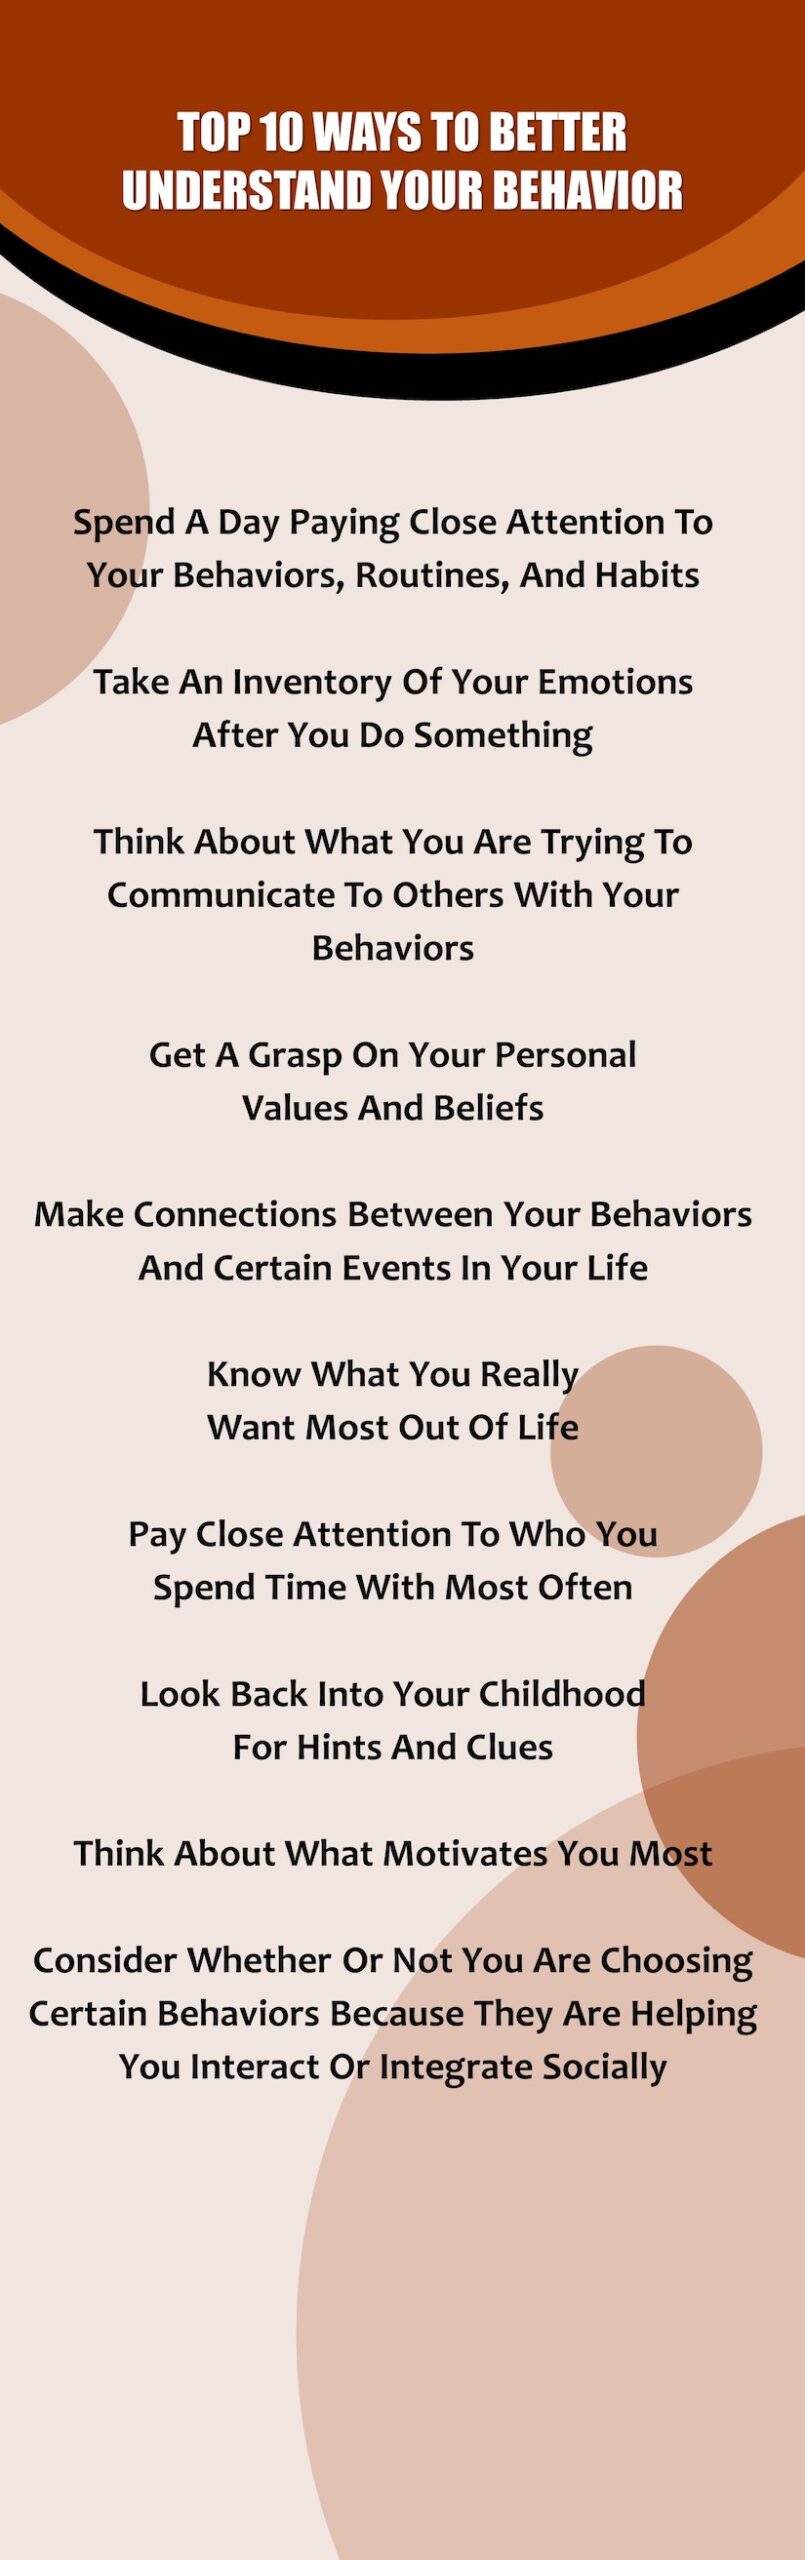 10 Ways to better understand your behavior.